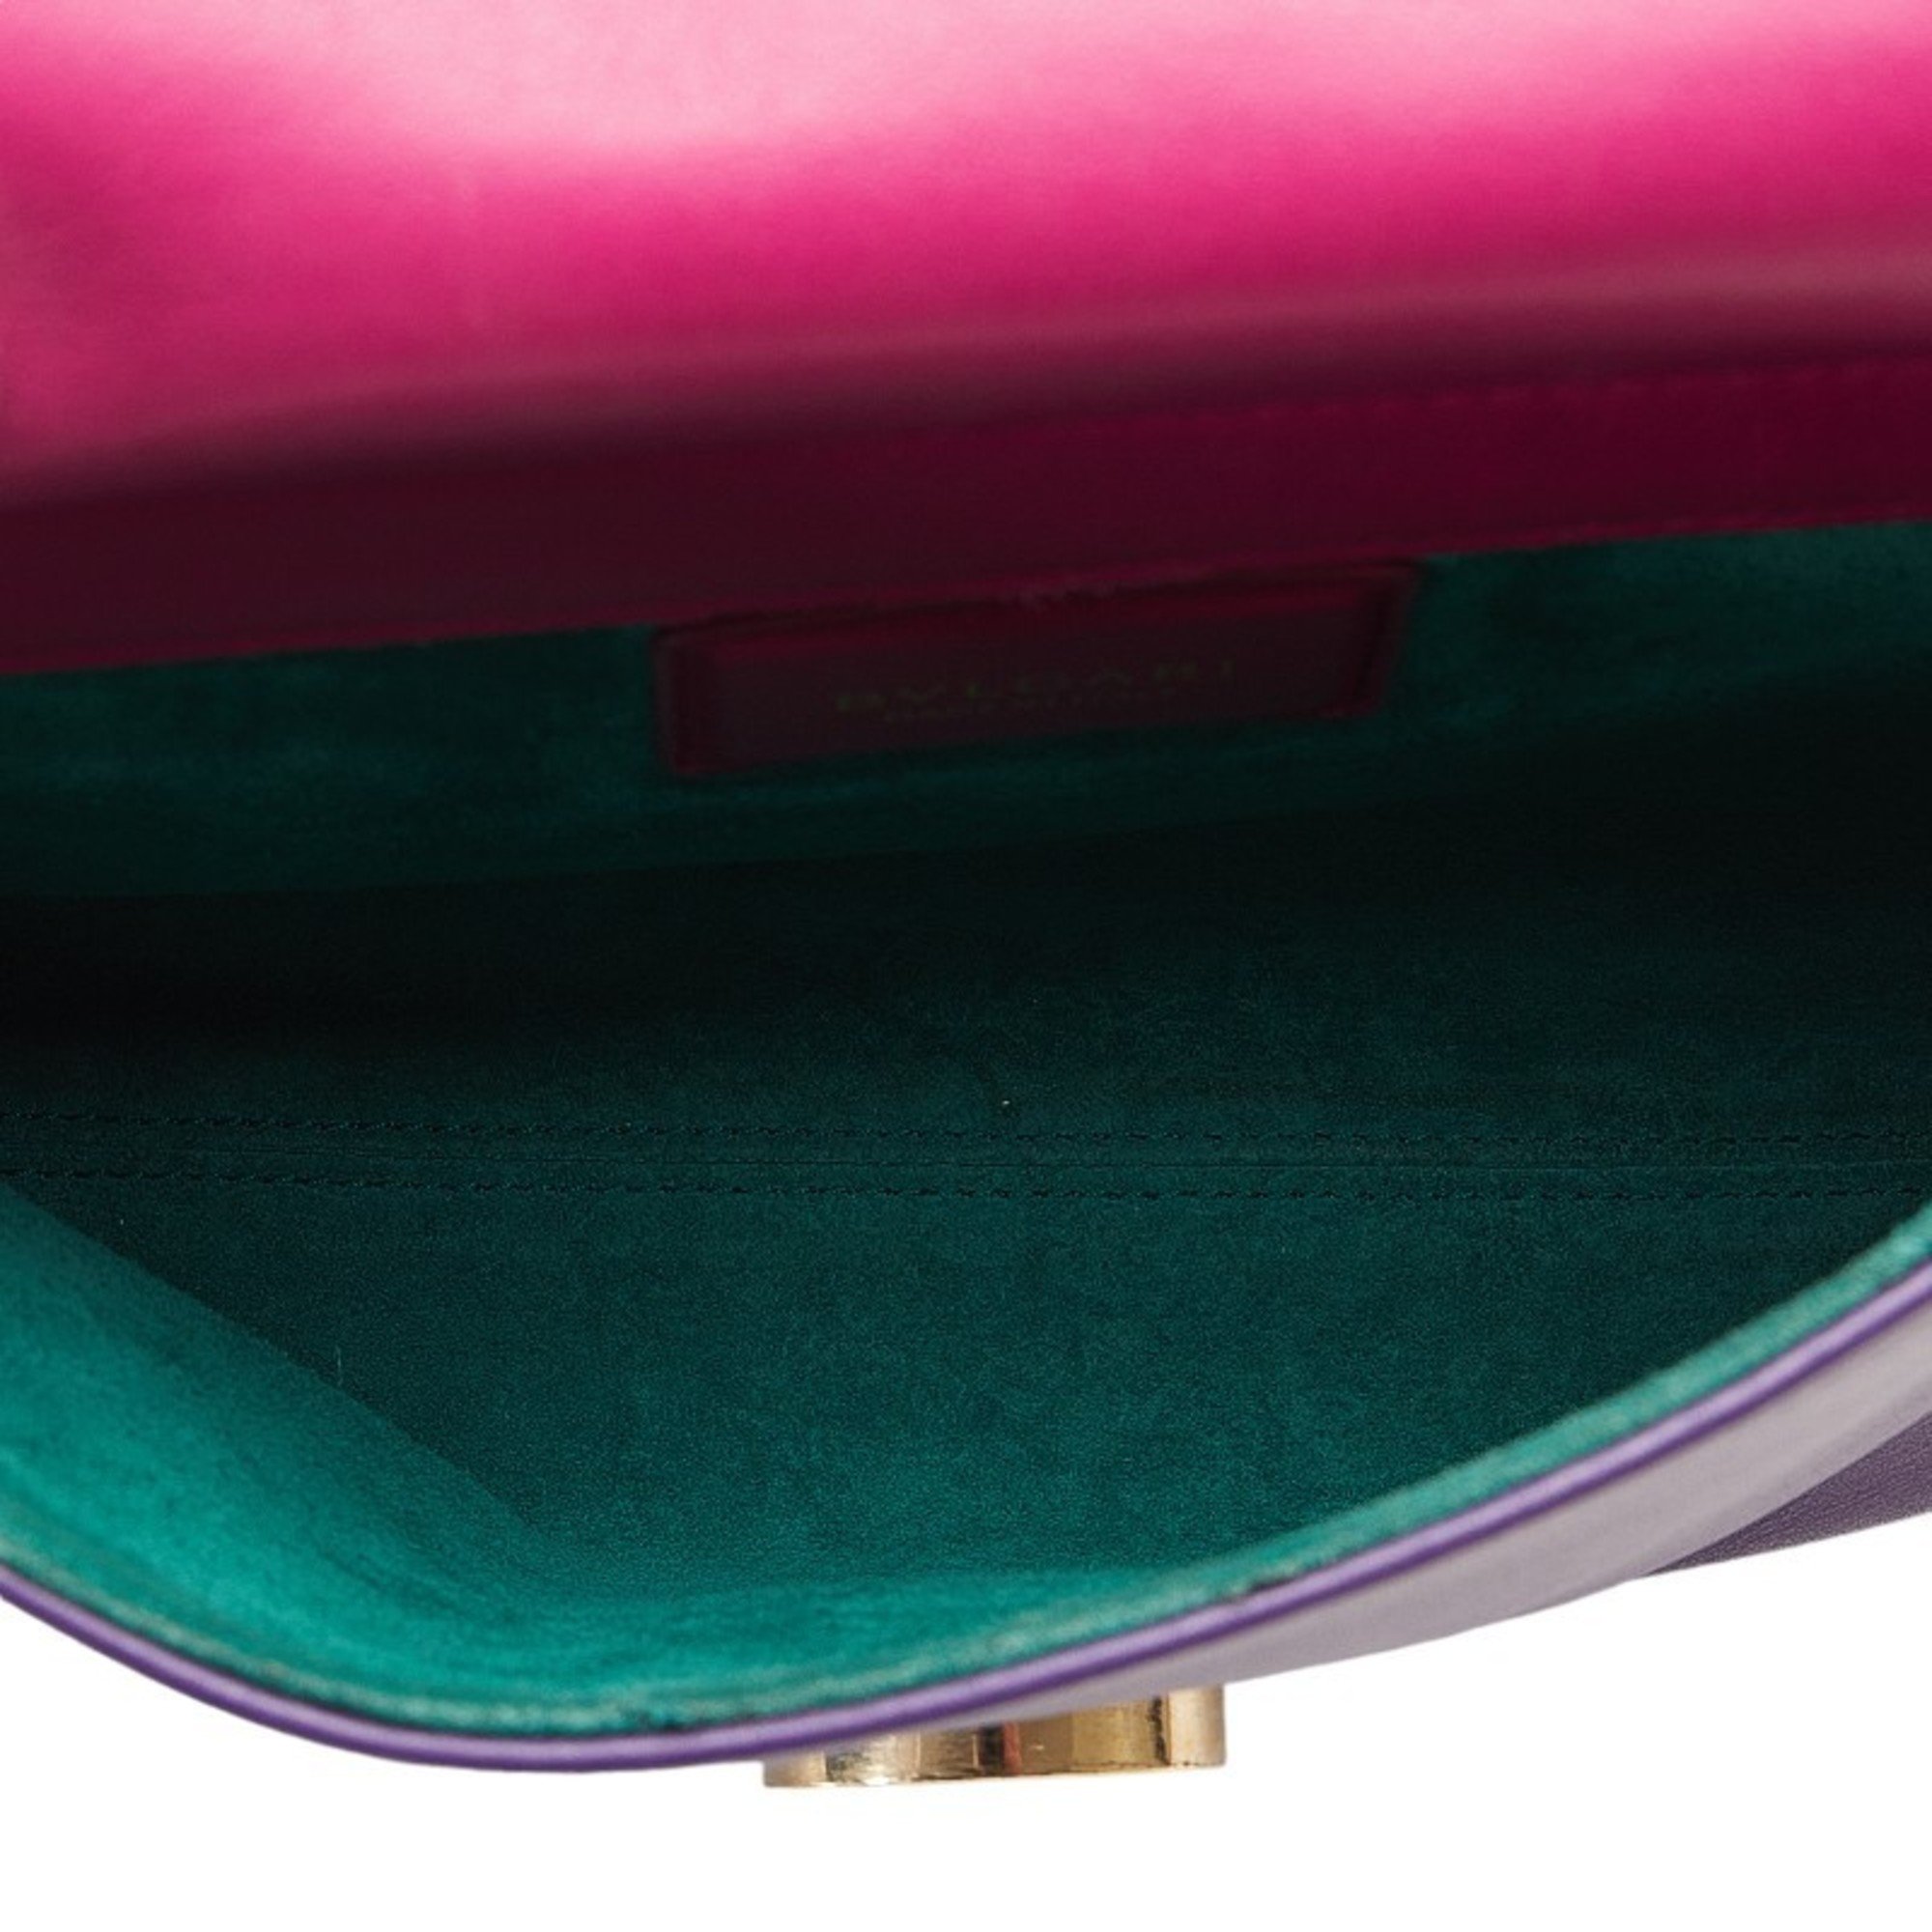 BVLGARI Duet Handbag 281057 Pink Purple Leather Ladies